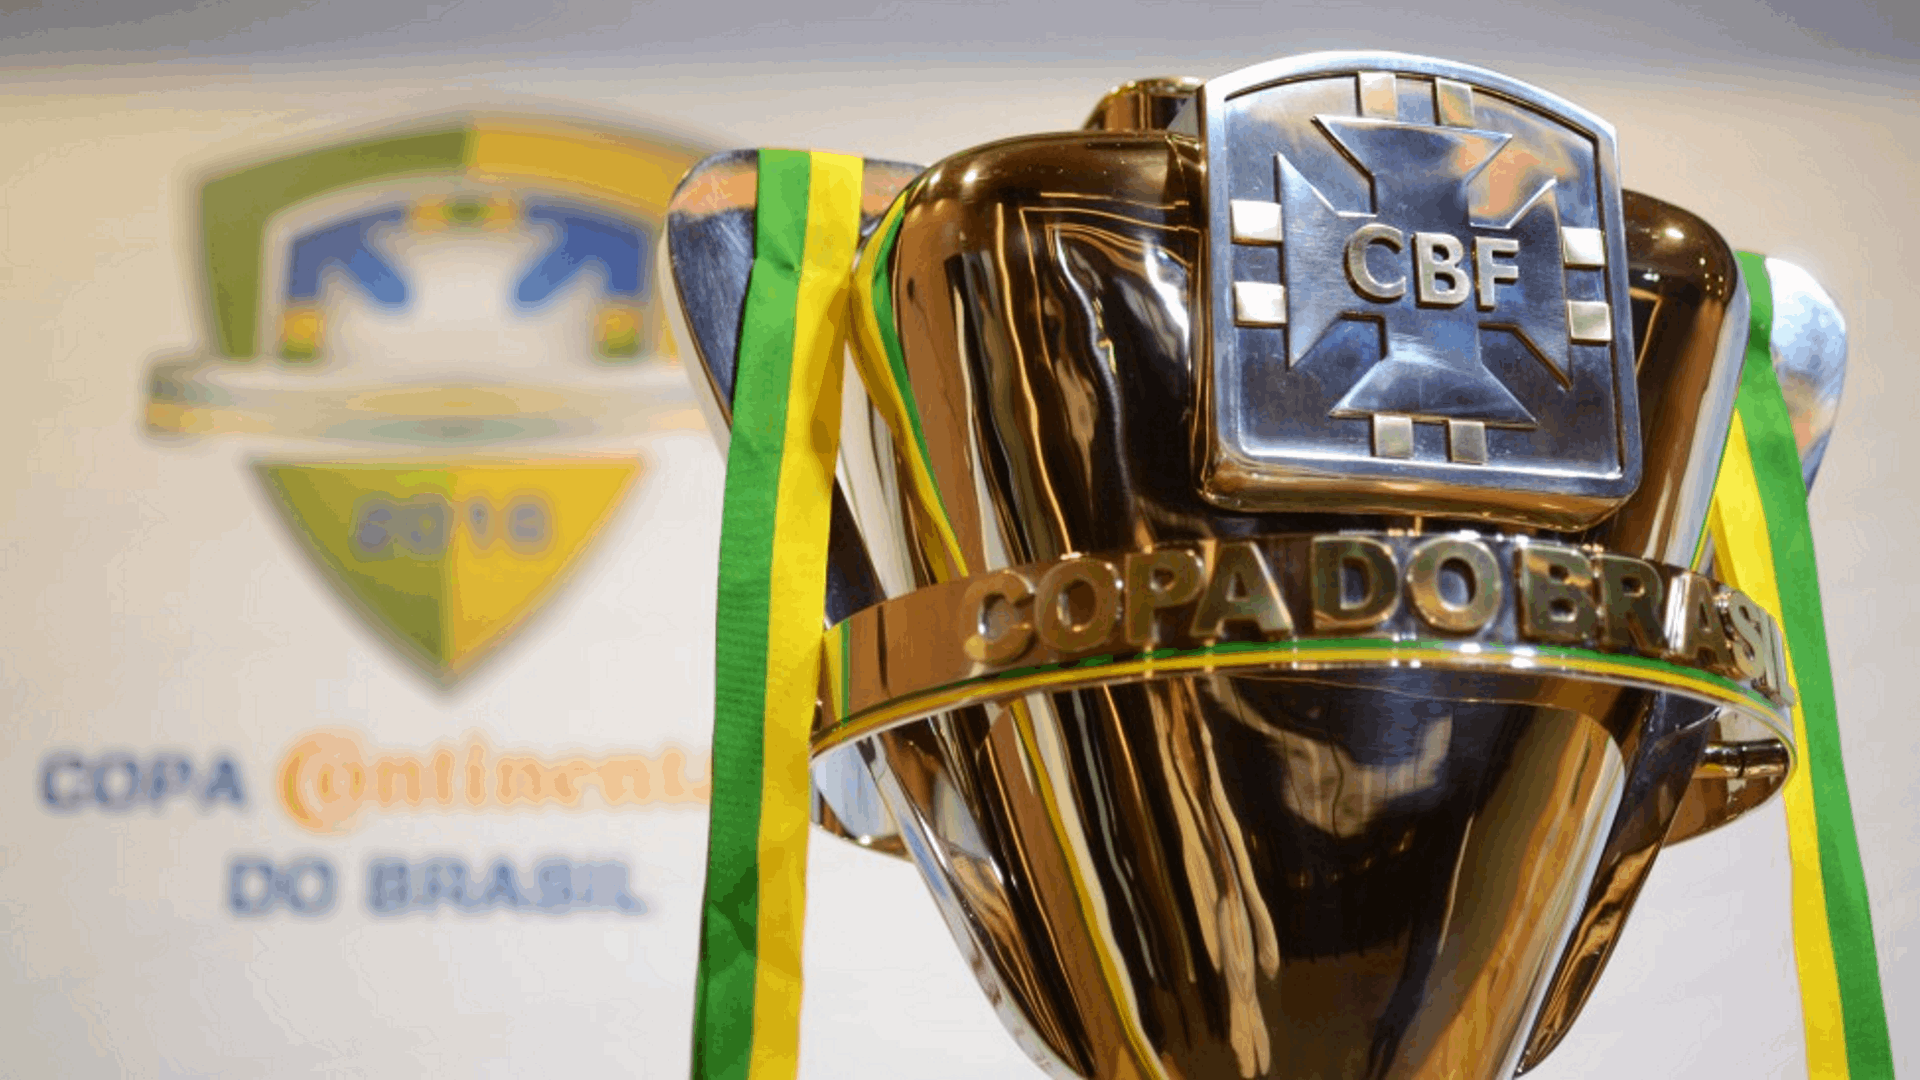 O blog "Goal" conta como acompanhar Copa do Brasil